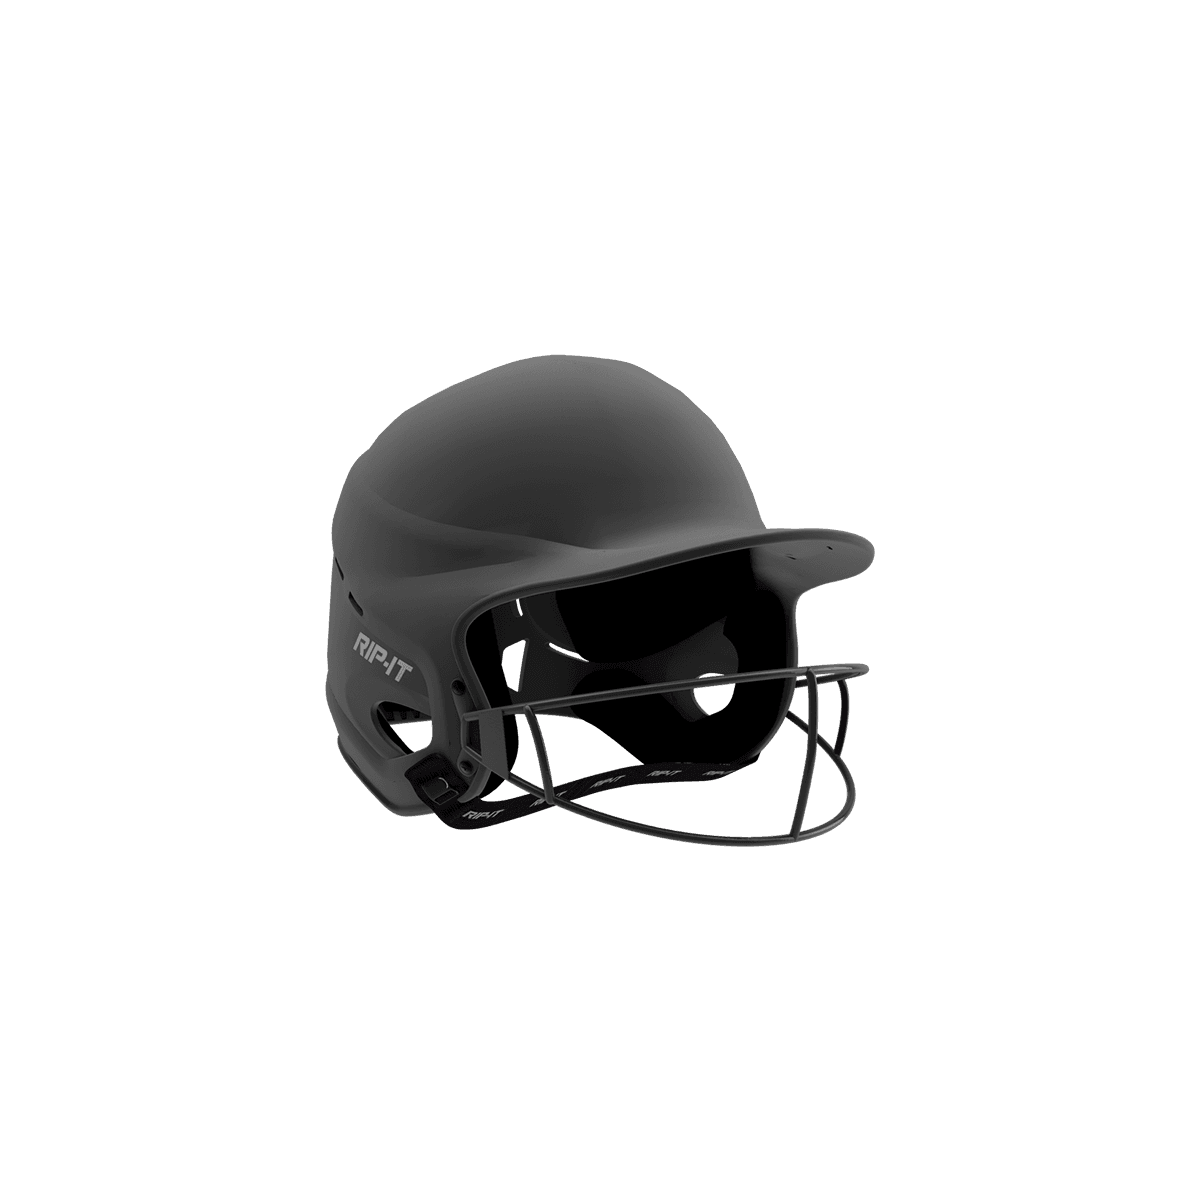 Rip-It Vision Pro Matte Fastpitch Softball Batting Helmet VIS 2 Sizes 